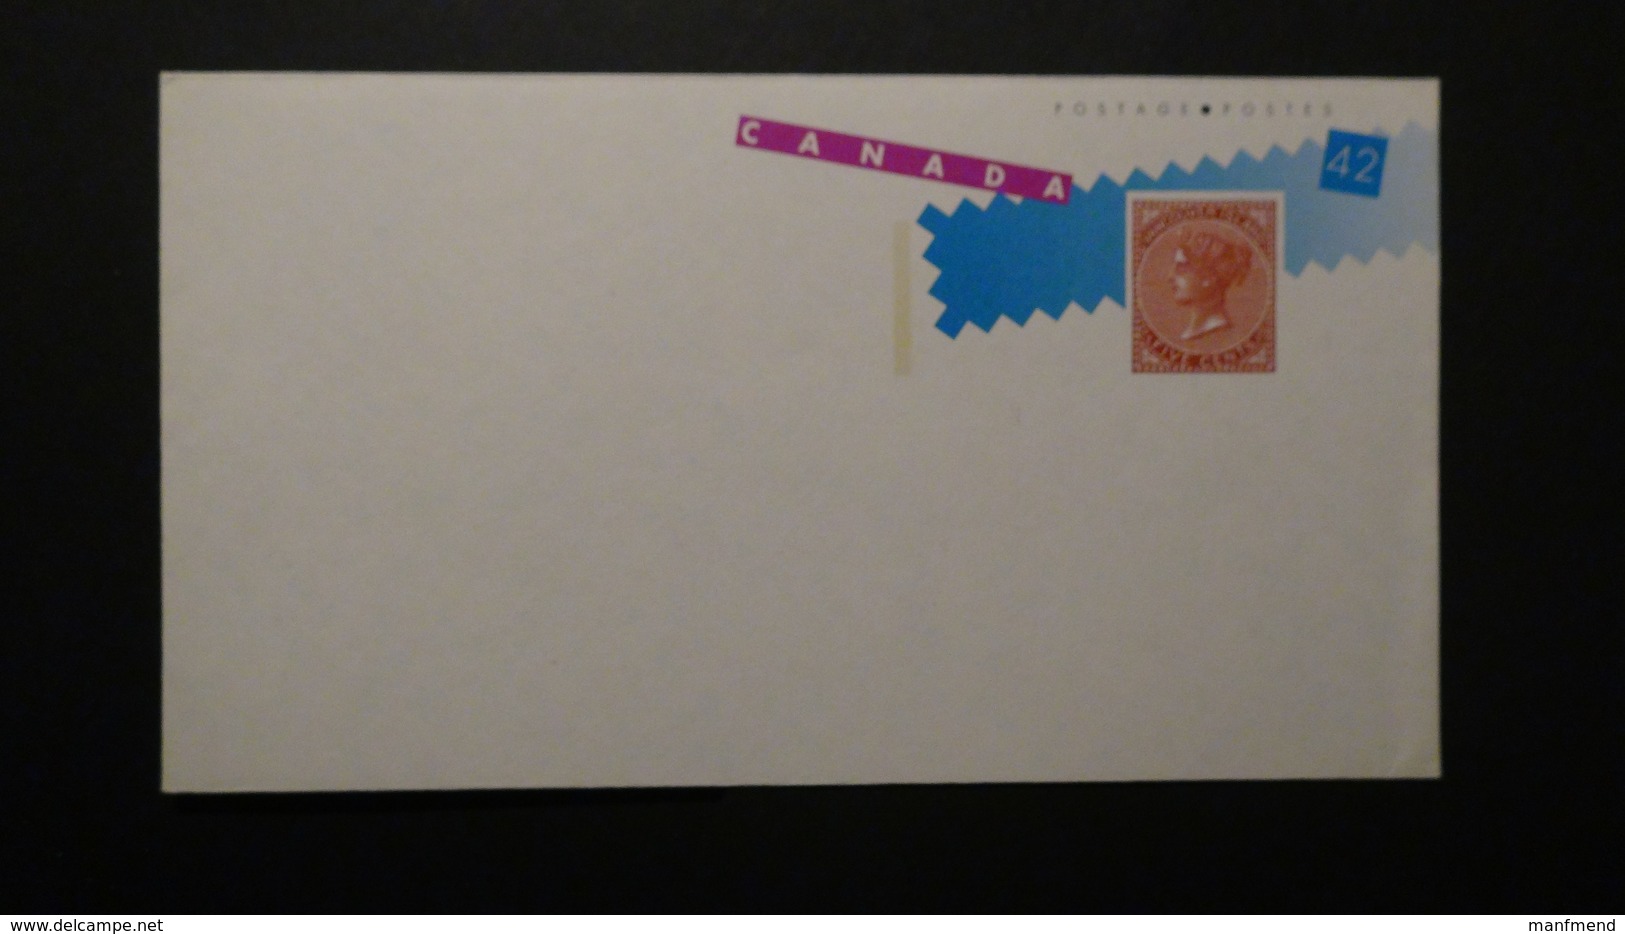 Canada - 42c - 1992 EXPOSITION PHILATELIQUE MONDIAL DE LA JEUNESSE - Envelope - Postal Stationery - Look Scan - 1953-.... Reign Of Elizabeth II